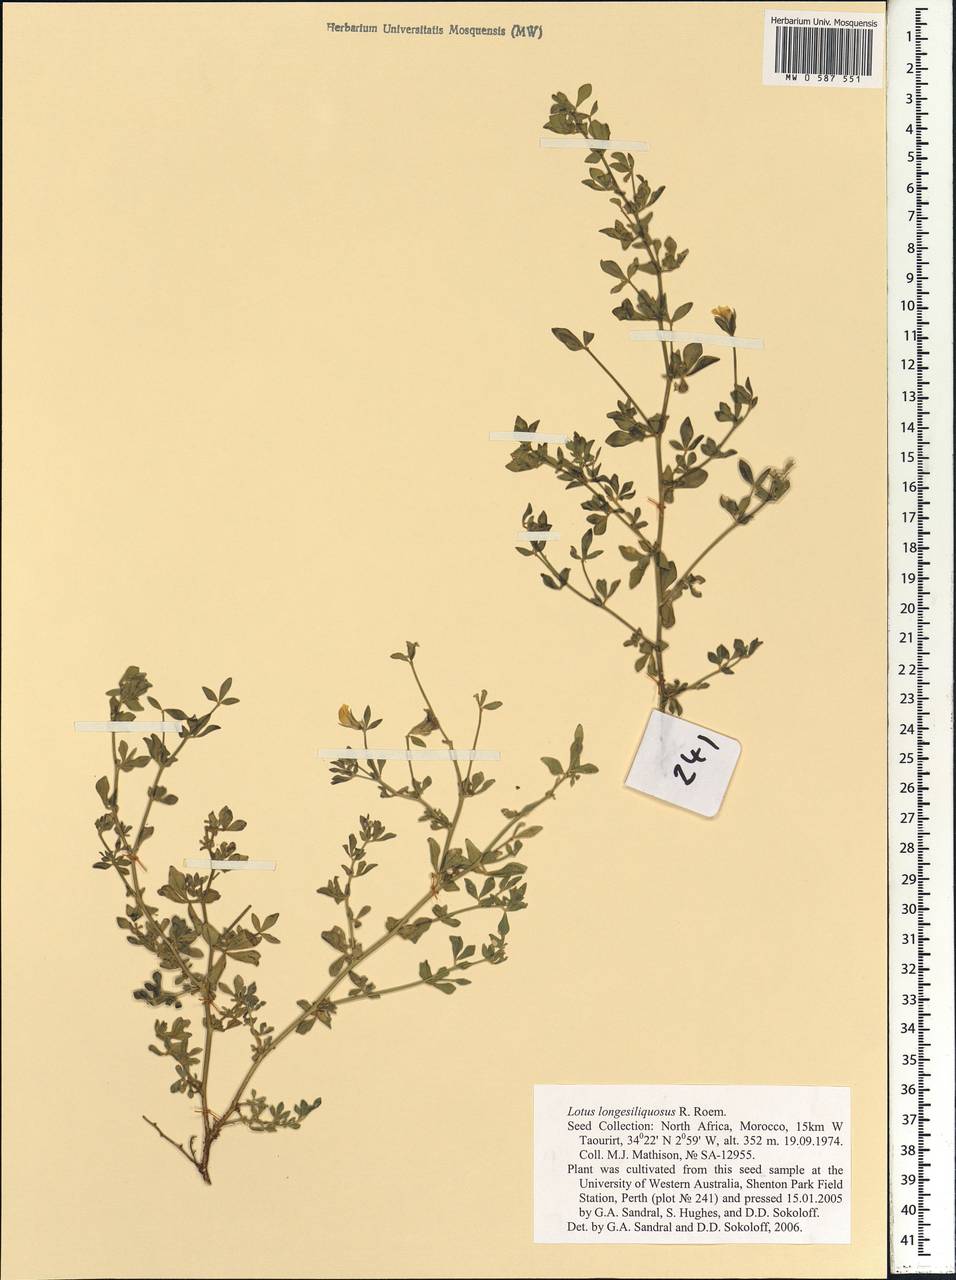 Lotus longesiliquosus R.Roem., Африка (AFR) (Марокко)